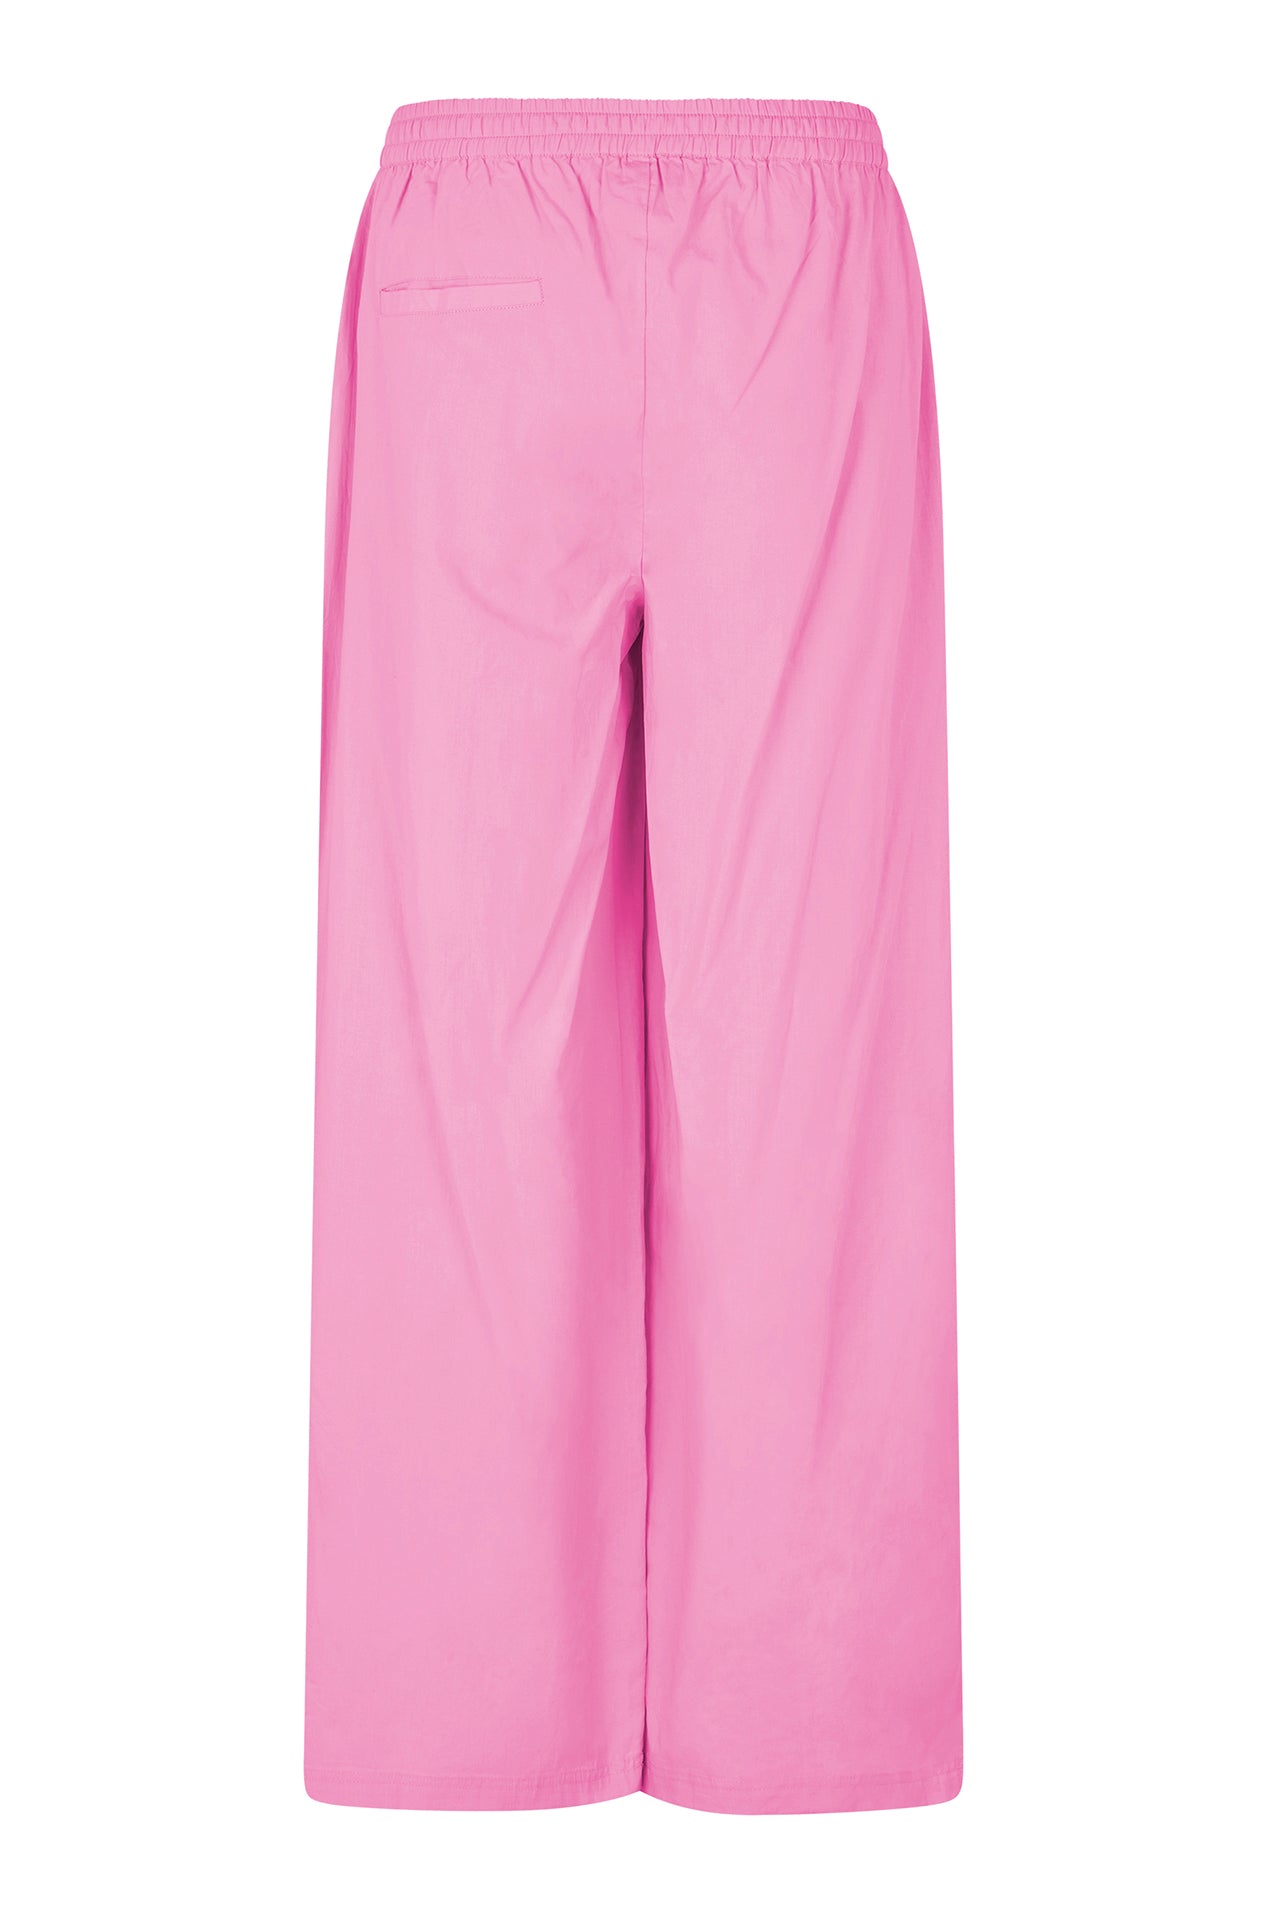 Lollys Laundry RitaLL Pants Pants 51 Pink